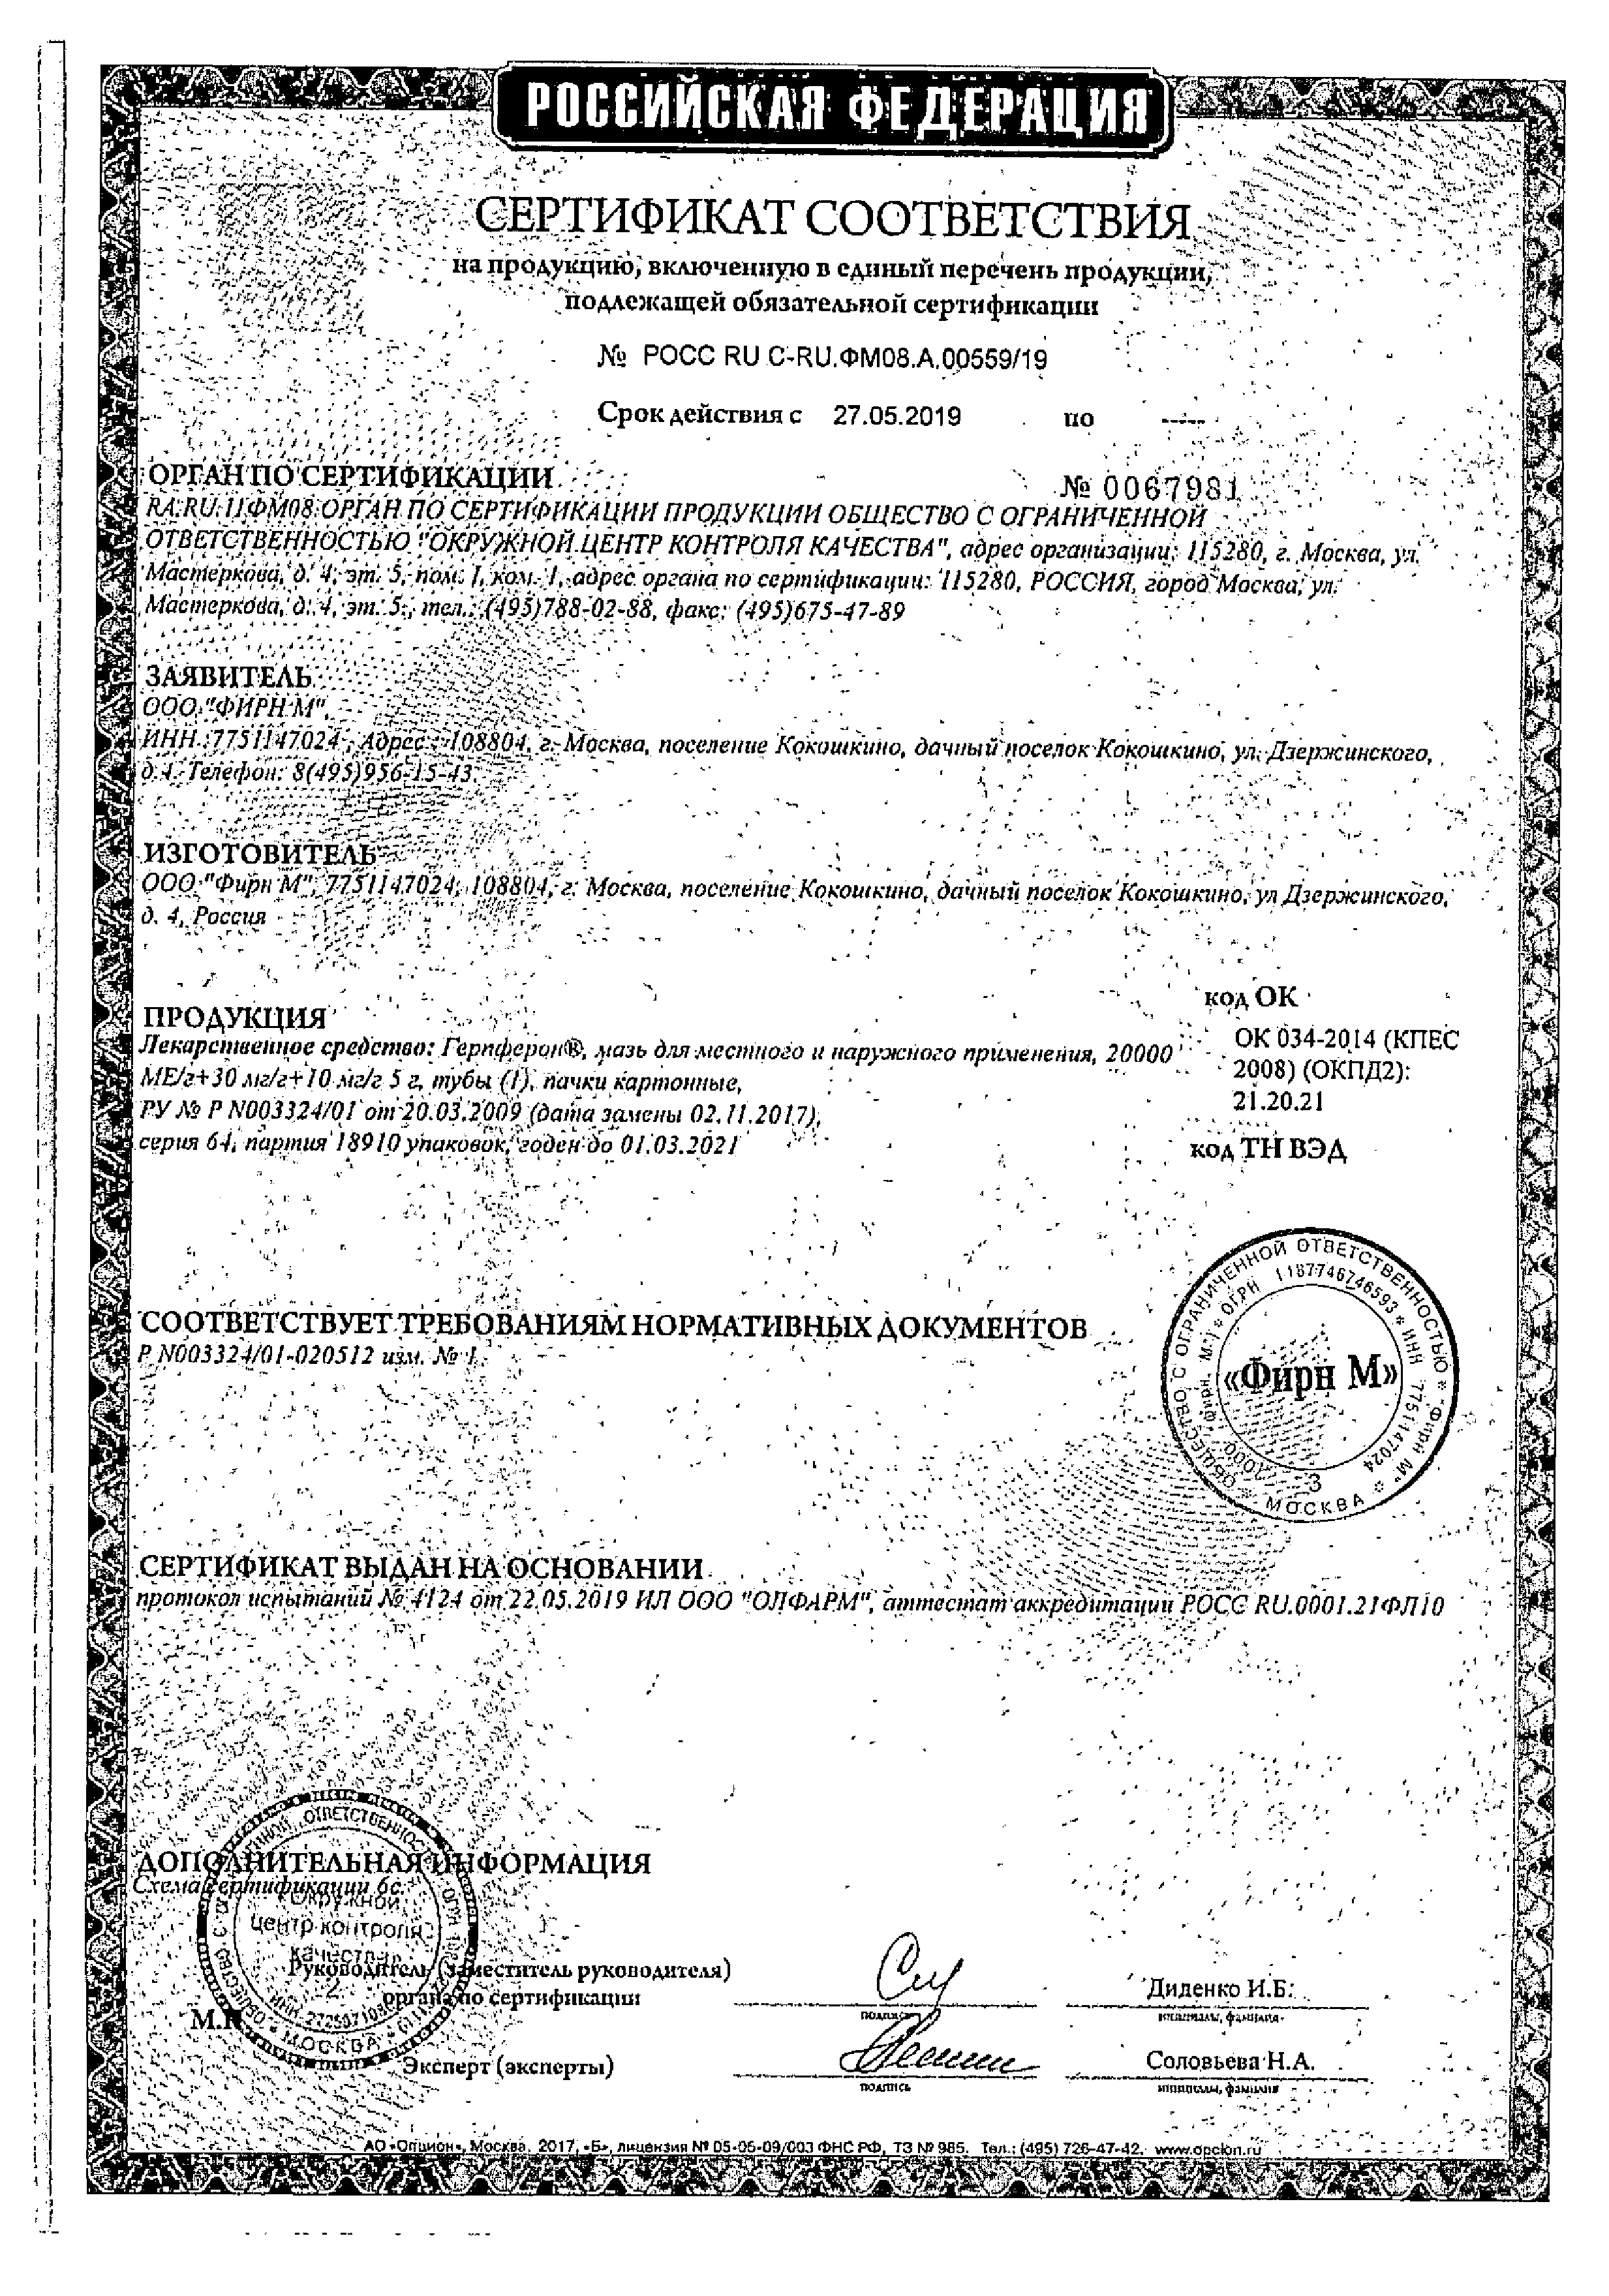 Герпферон сертификат